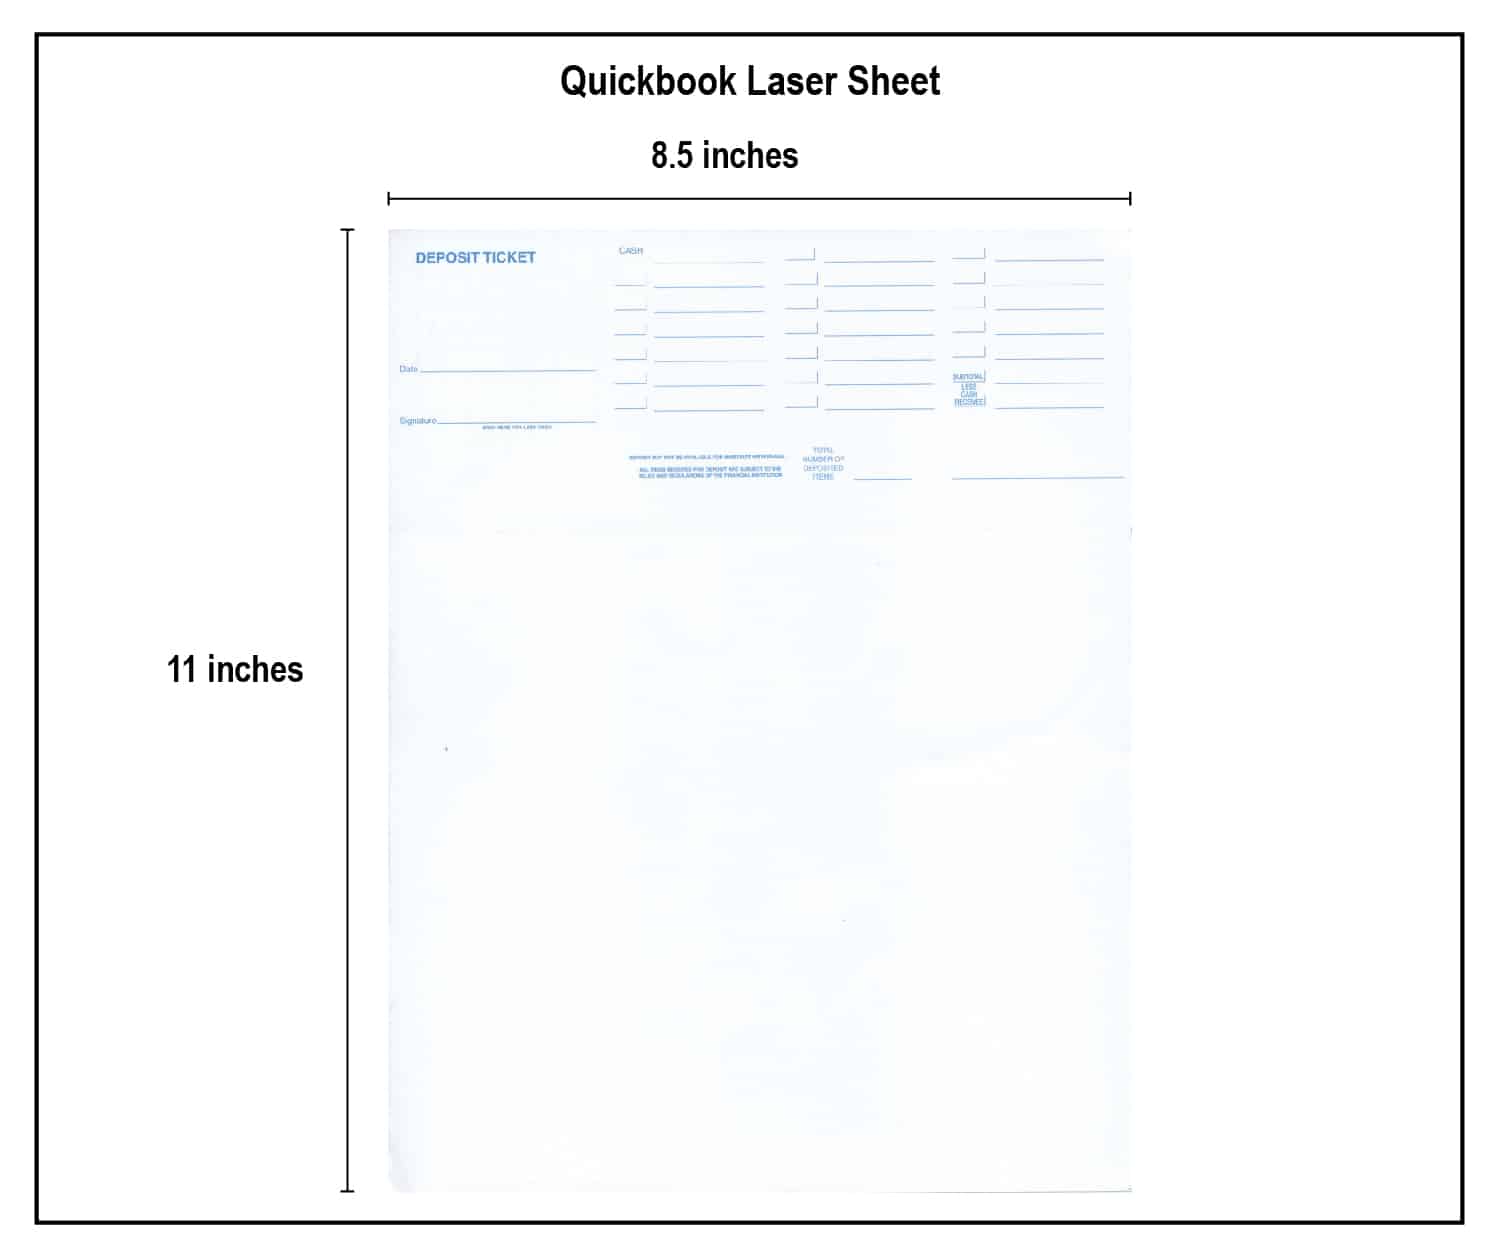 Quickbooks Laser Sheet